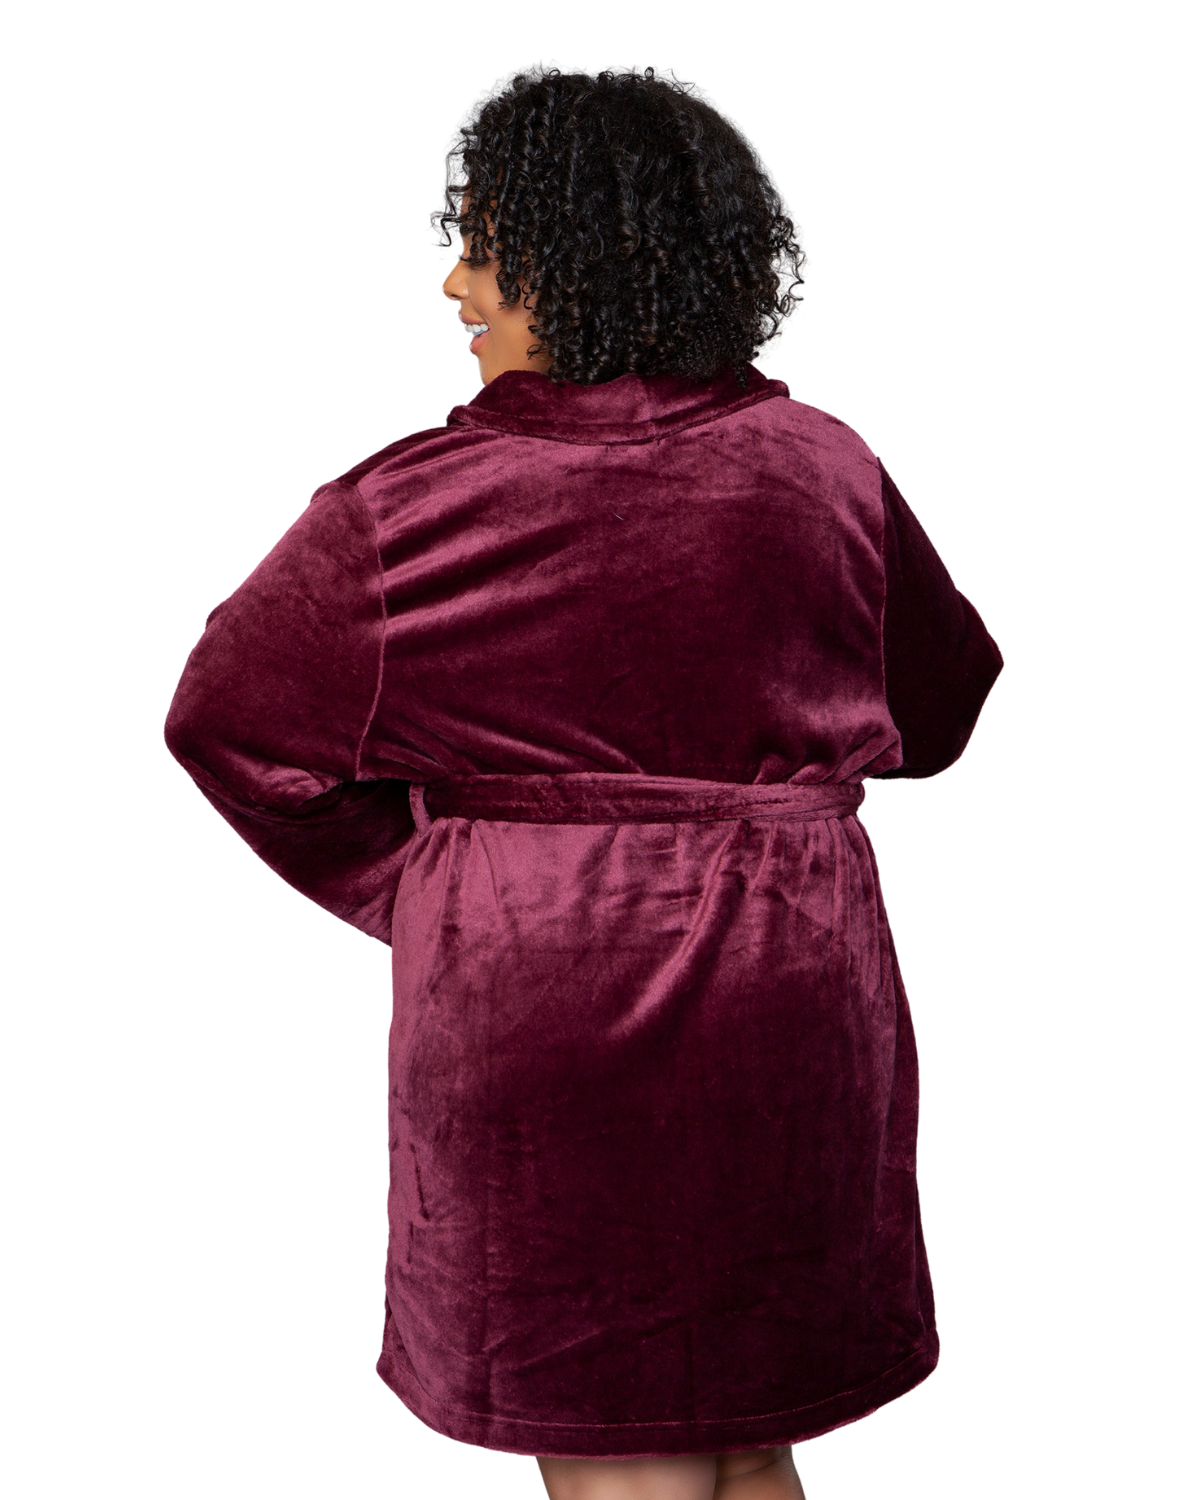 Model wearing a knee length plush robe in maroon